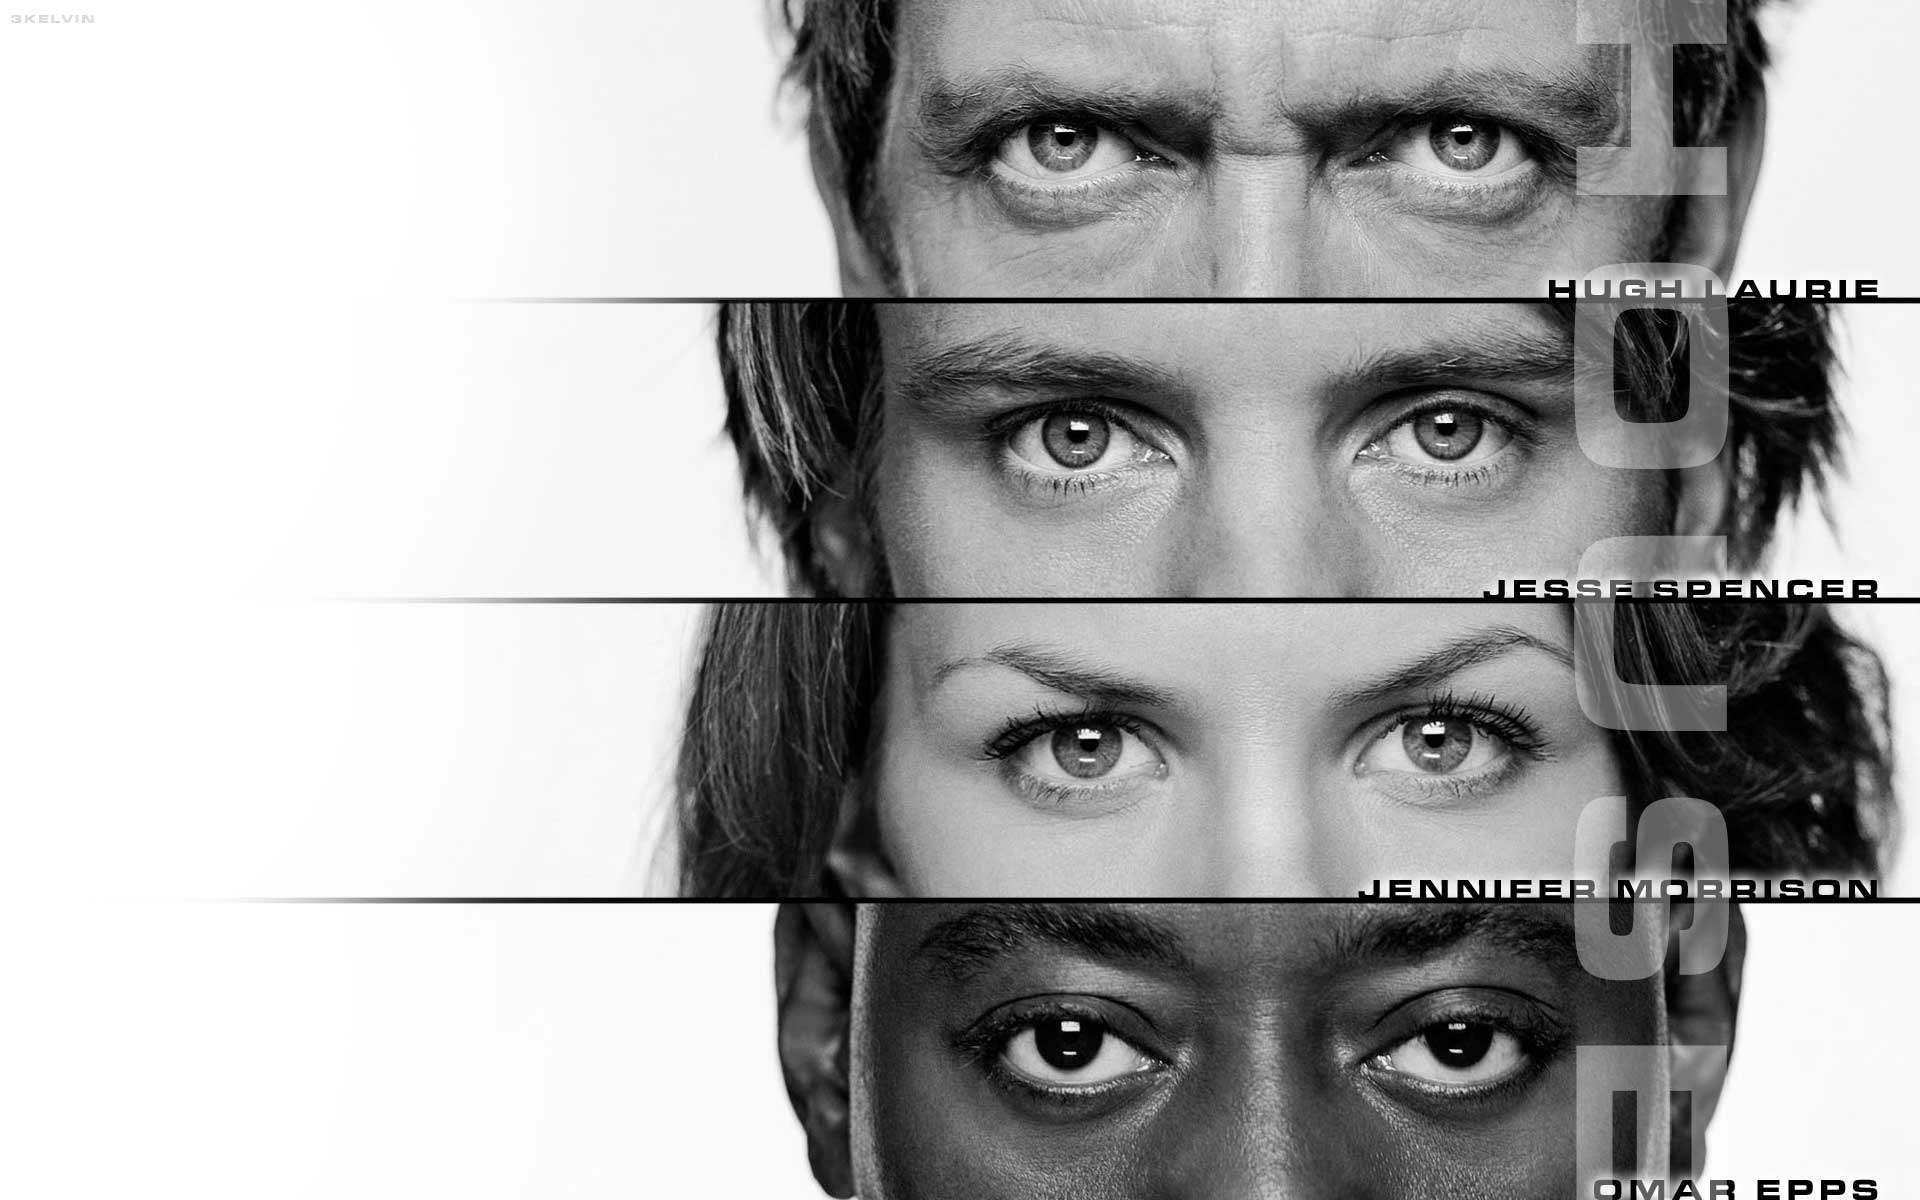 Hugh Laurie, Omar Epps, Jesse Spencer, Jennifer Morrison - the cast of House M.D.